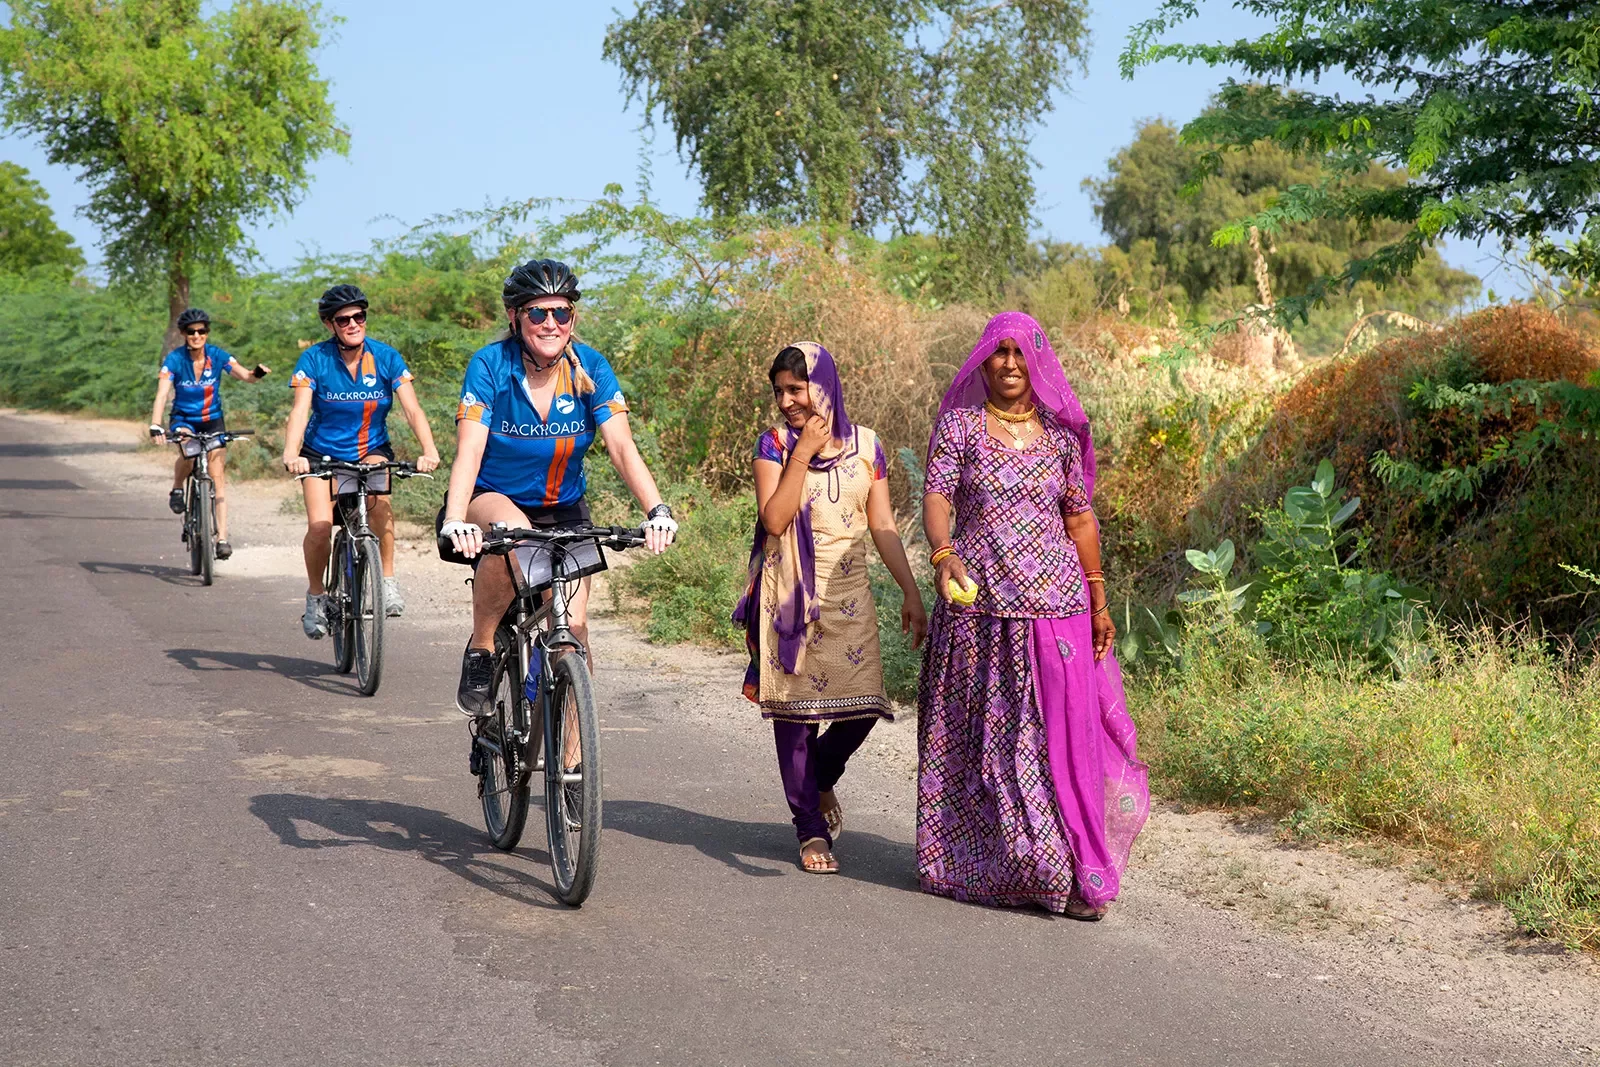 Backroads guests biking past Indian women in saris